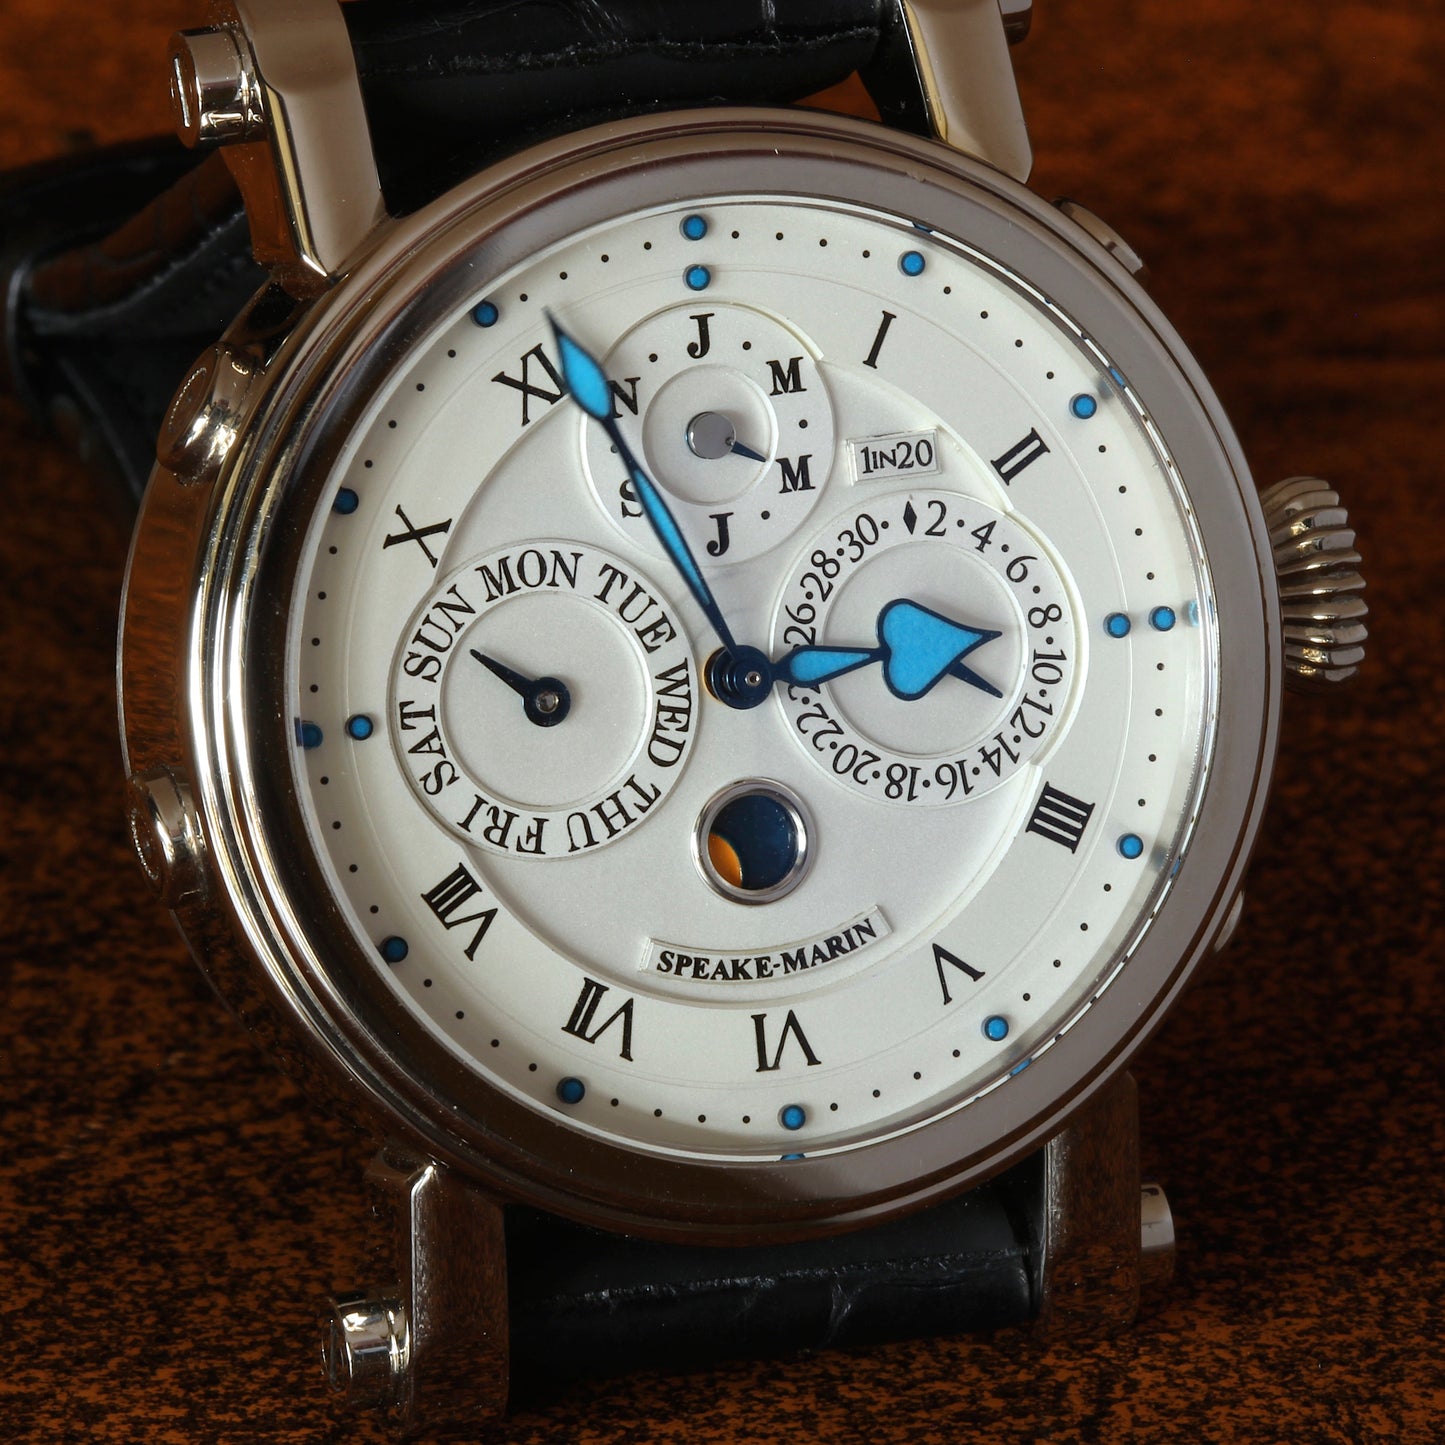 Estate 18k WG Speake-Marin 1 in 20 Perpetual Calendar watch